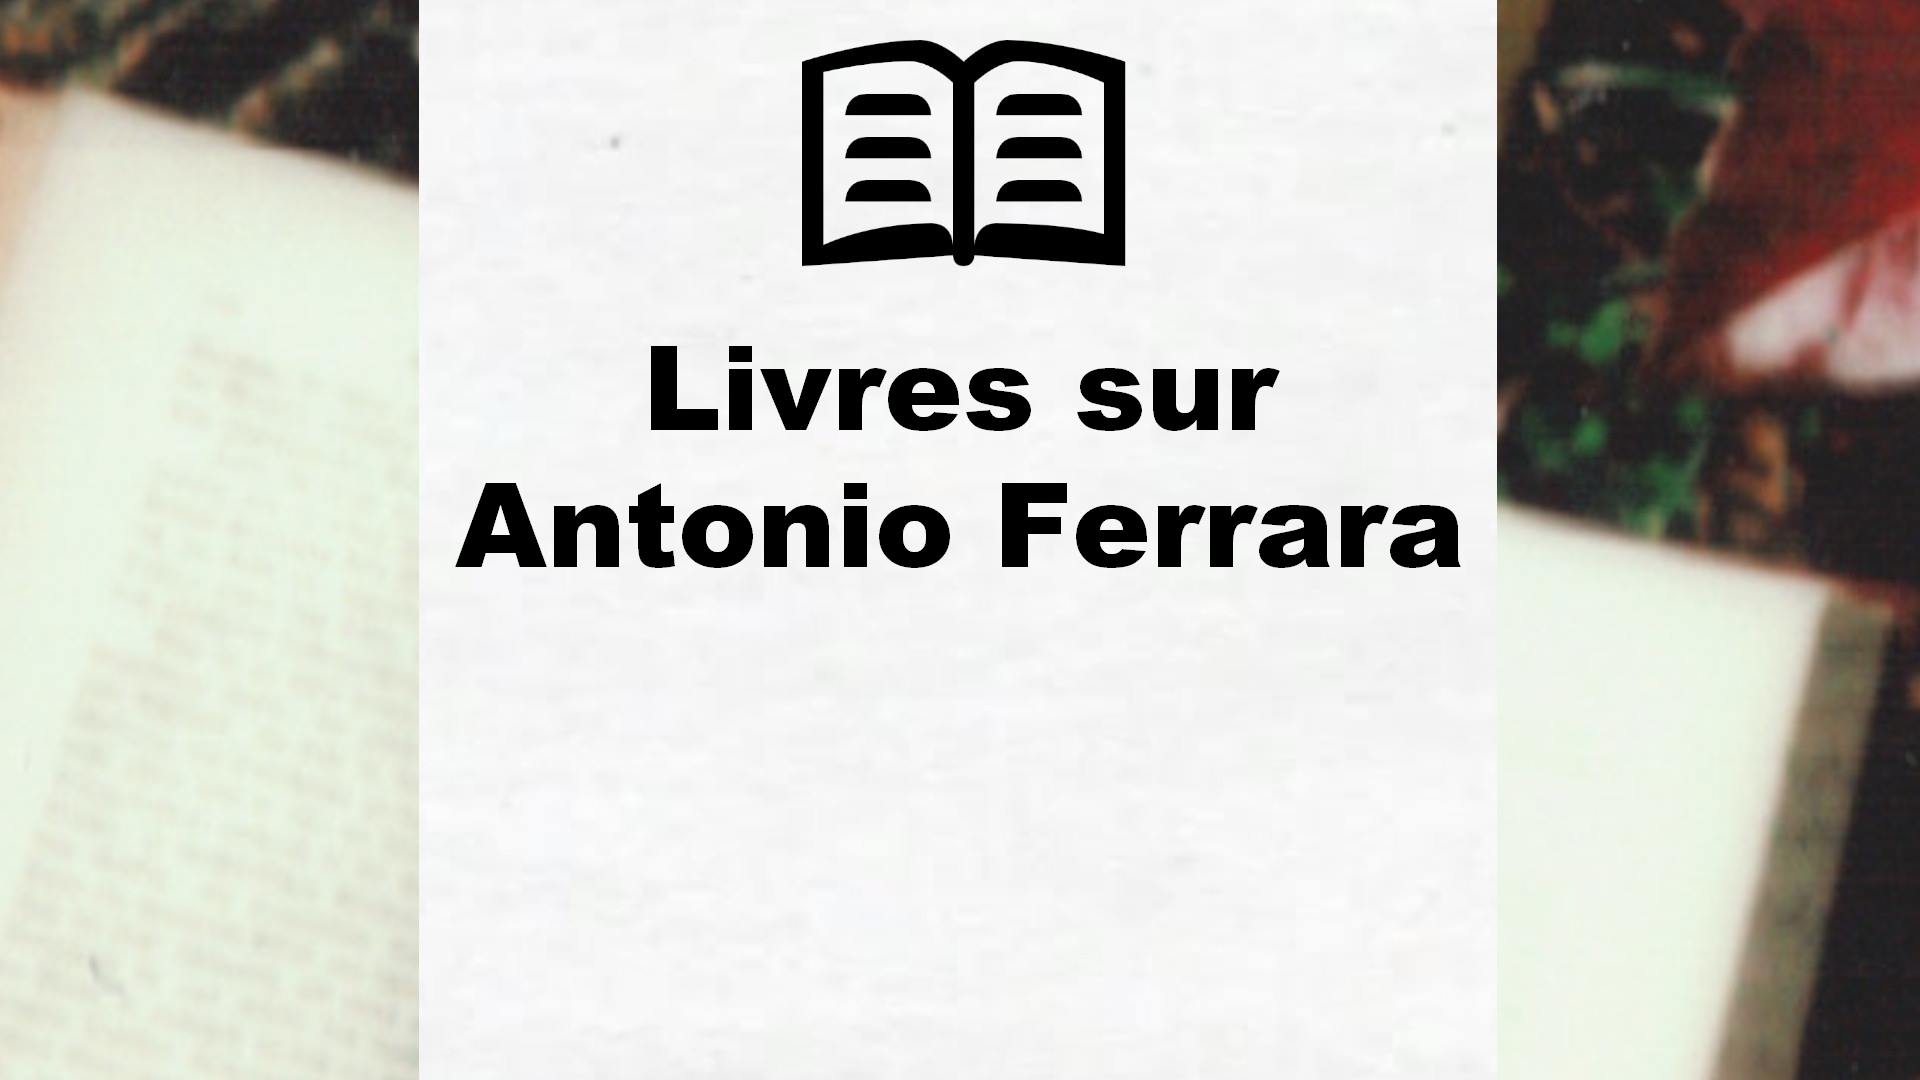 Livres sur Antonio Ferrara